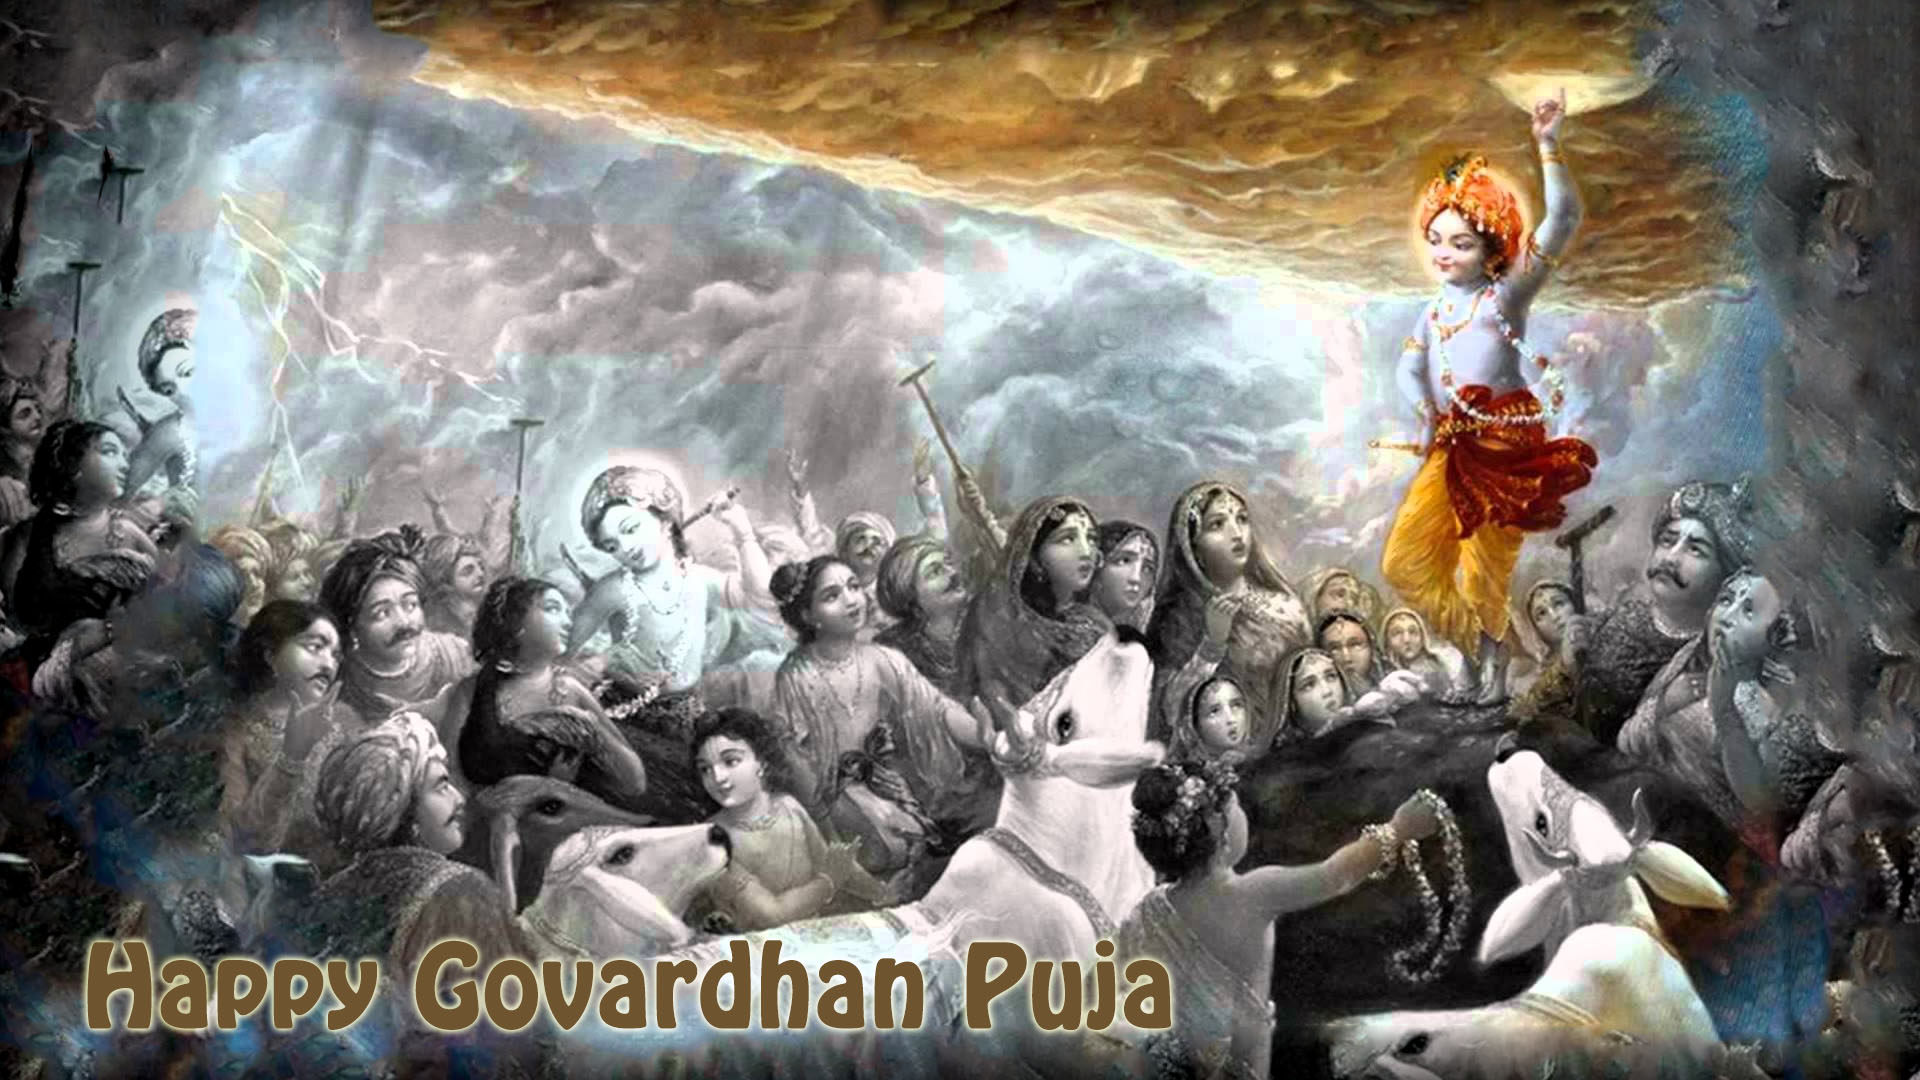 Govardhan Puja Image Wallpaper | Festivals